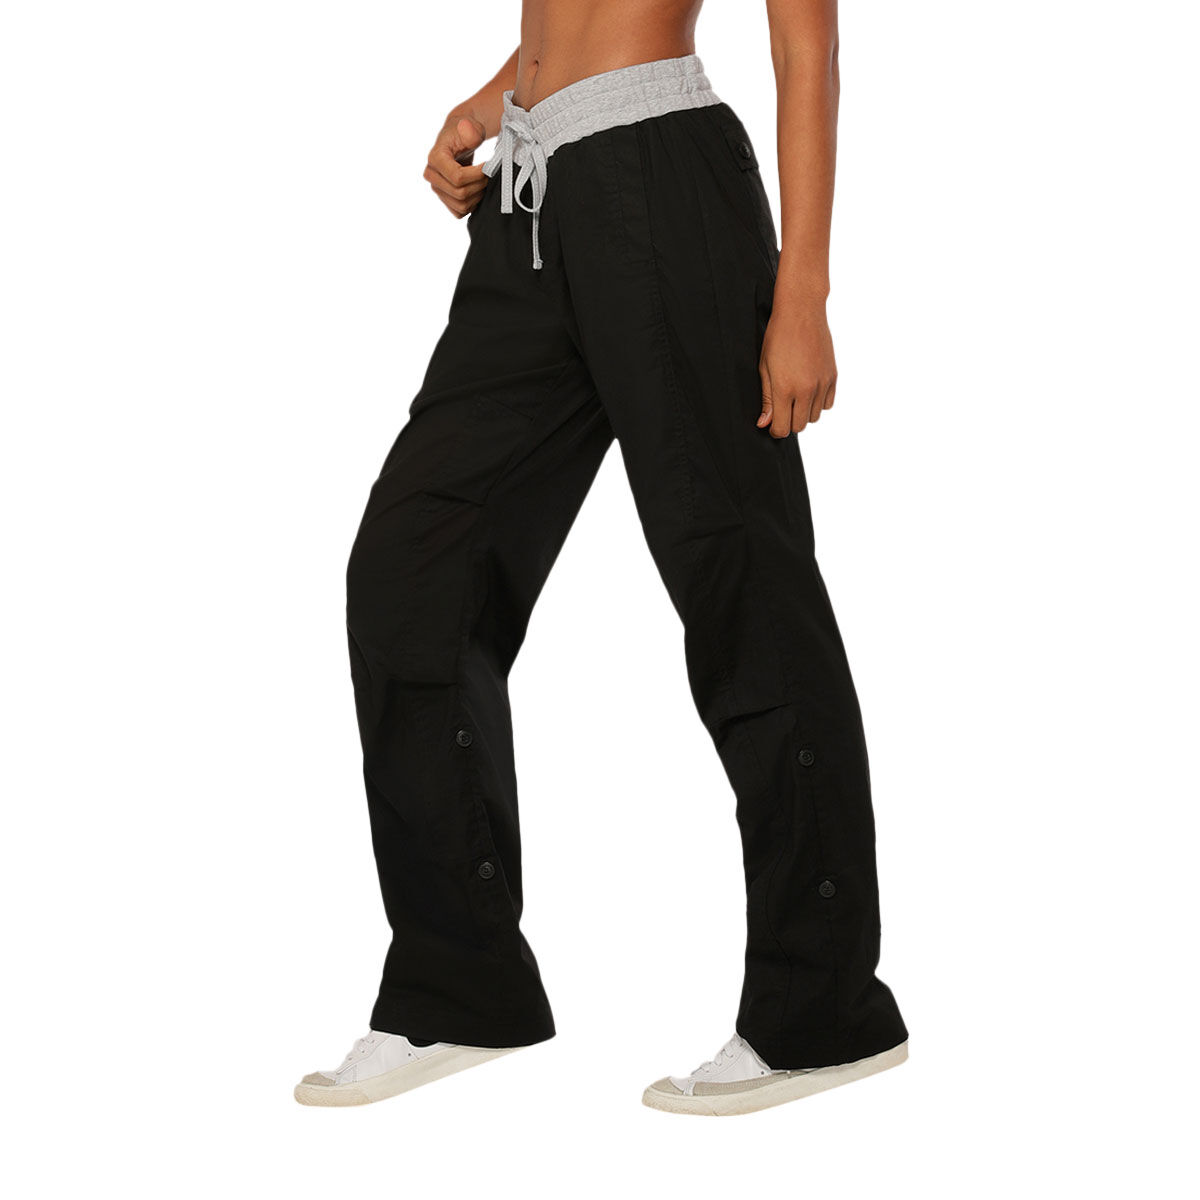 Lorna Jane - Flashdance pants on Designer Wardrobe